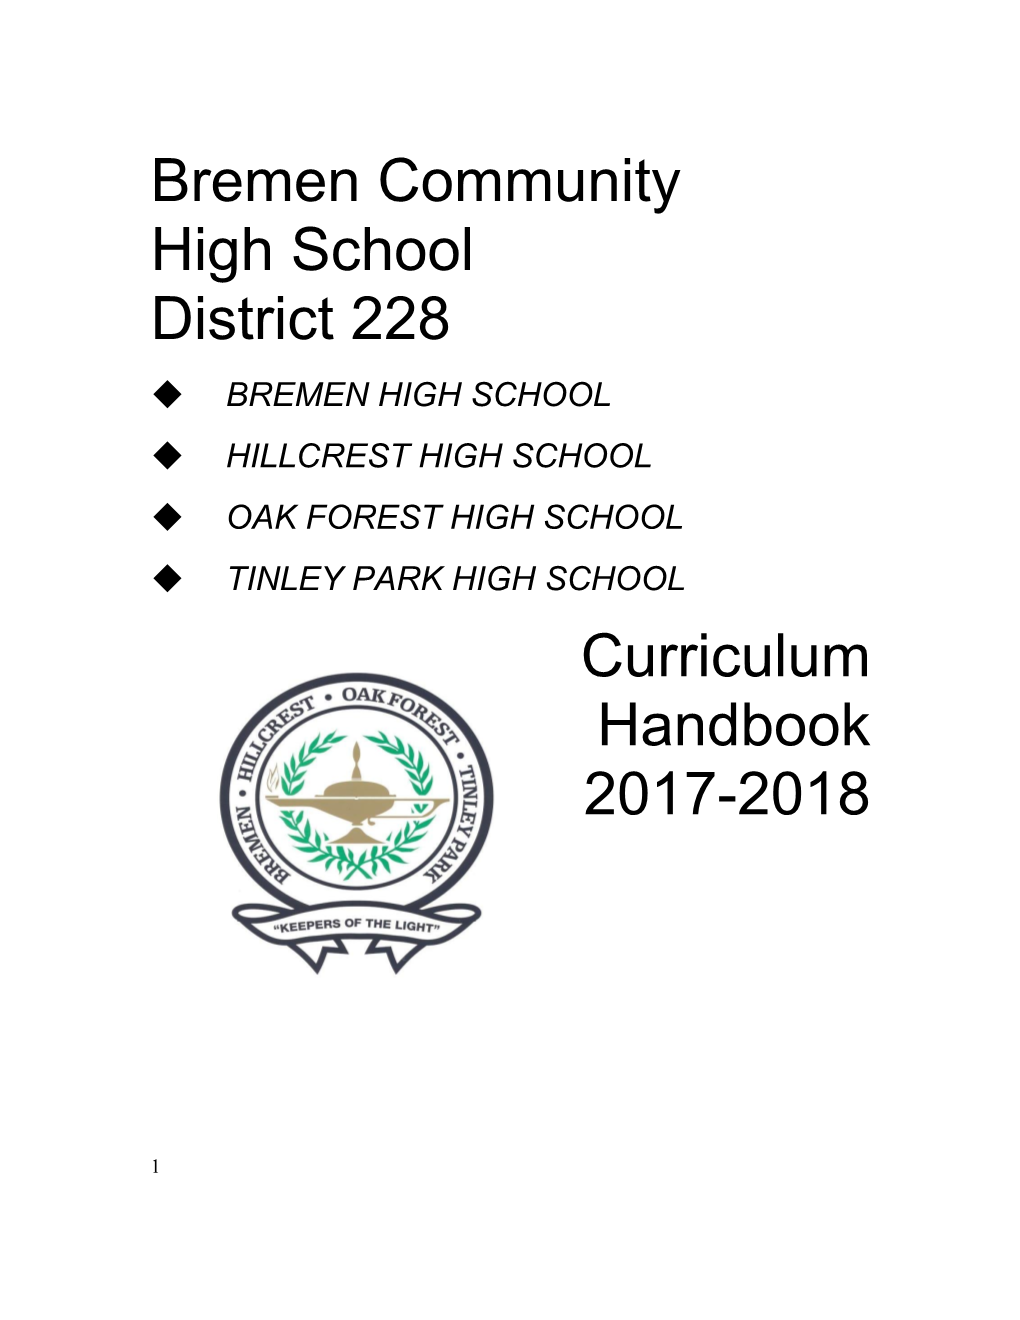 Bremen Community High School District 228 Board of Education